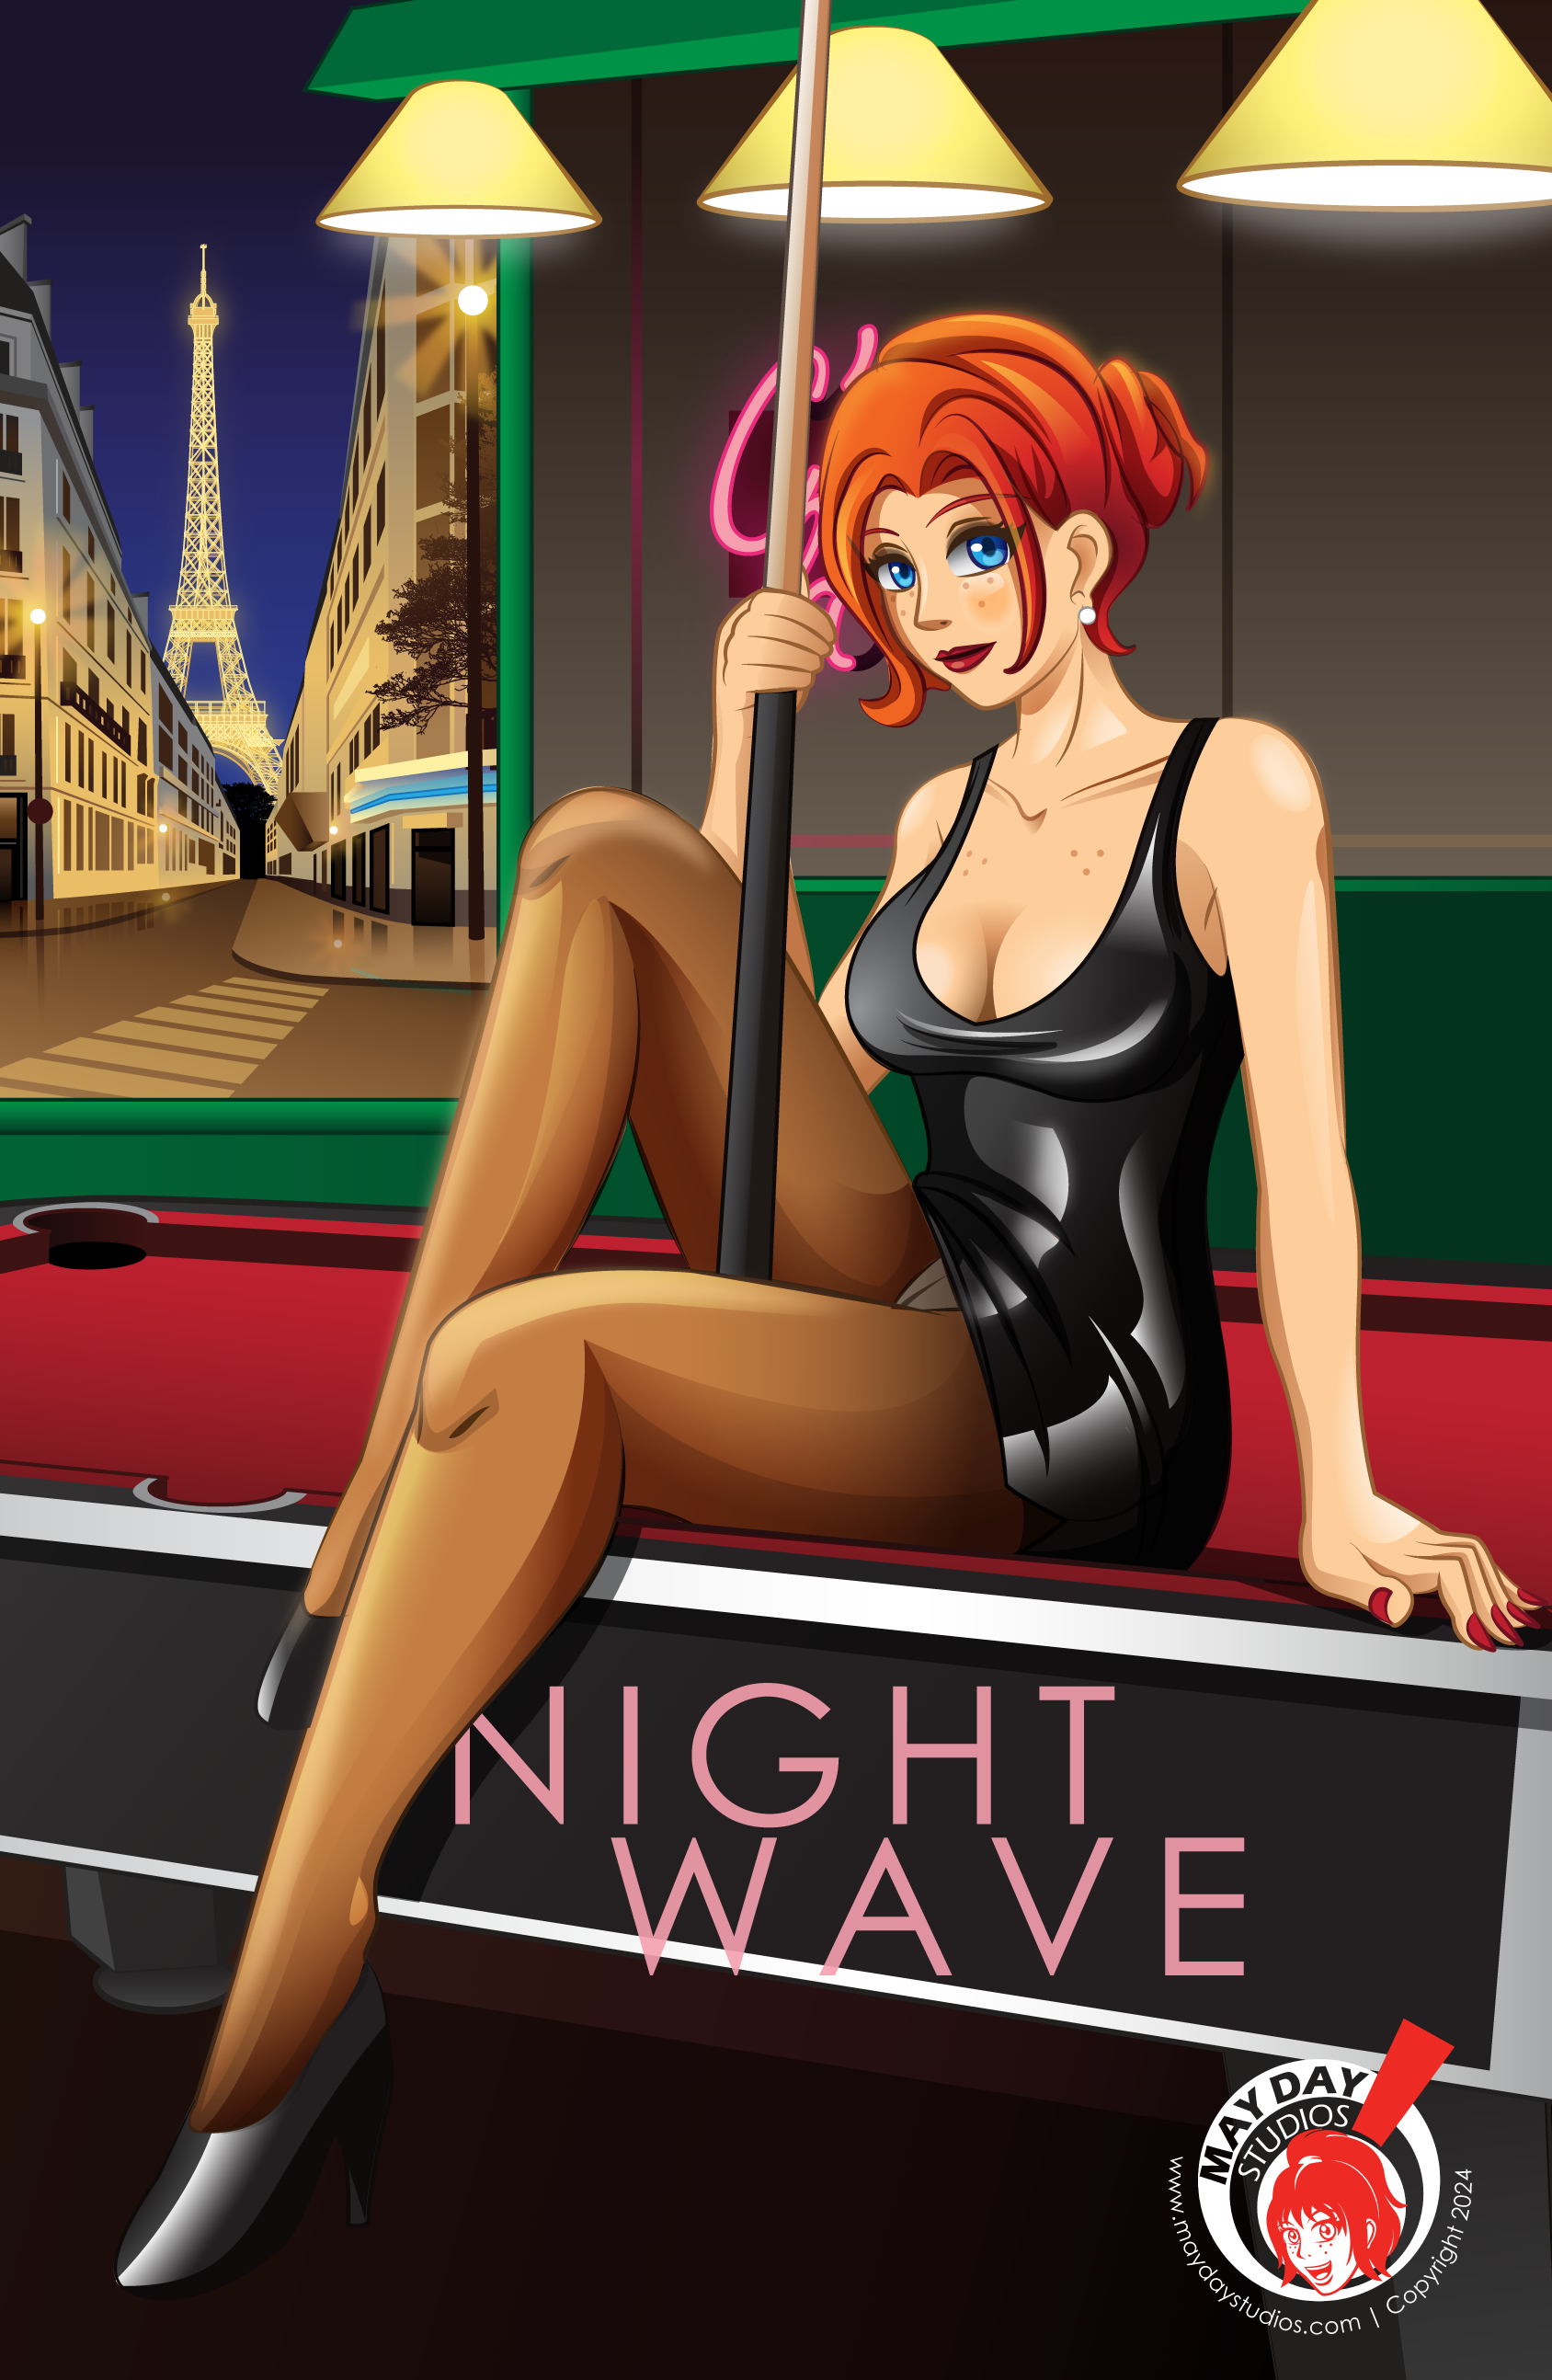 Nightwave poster